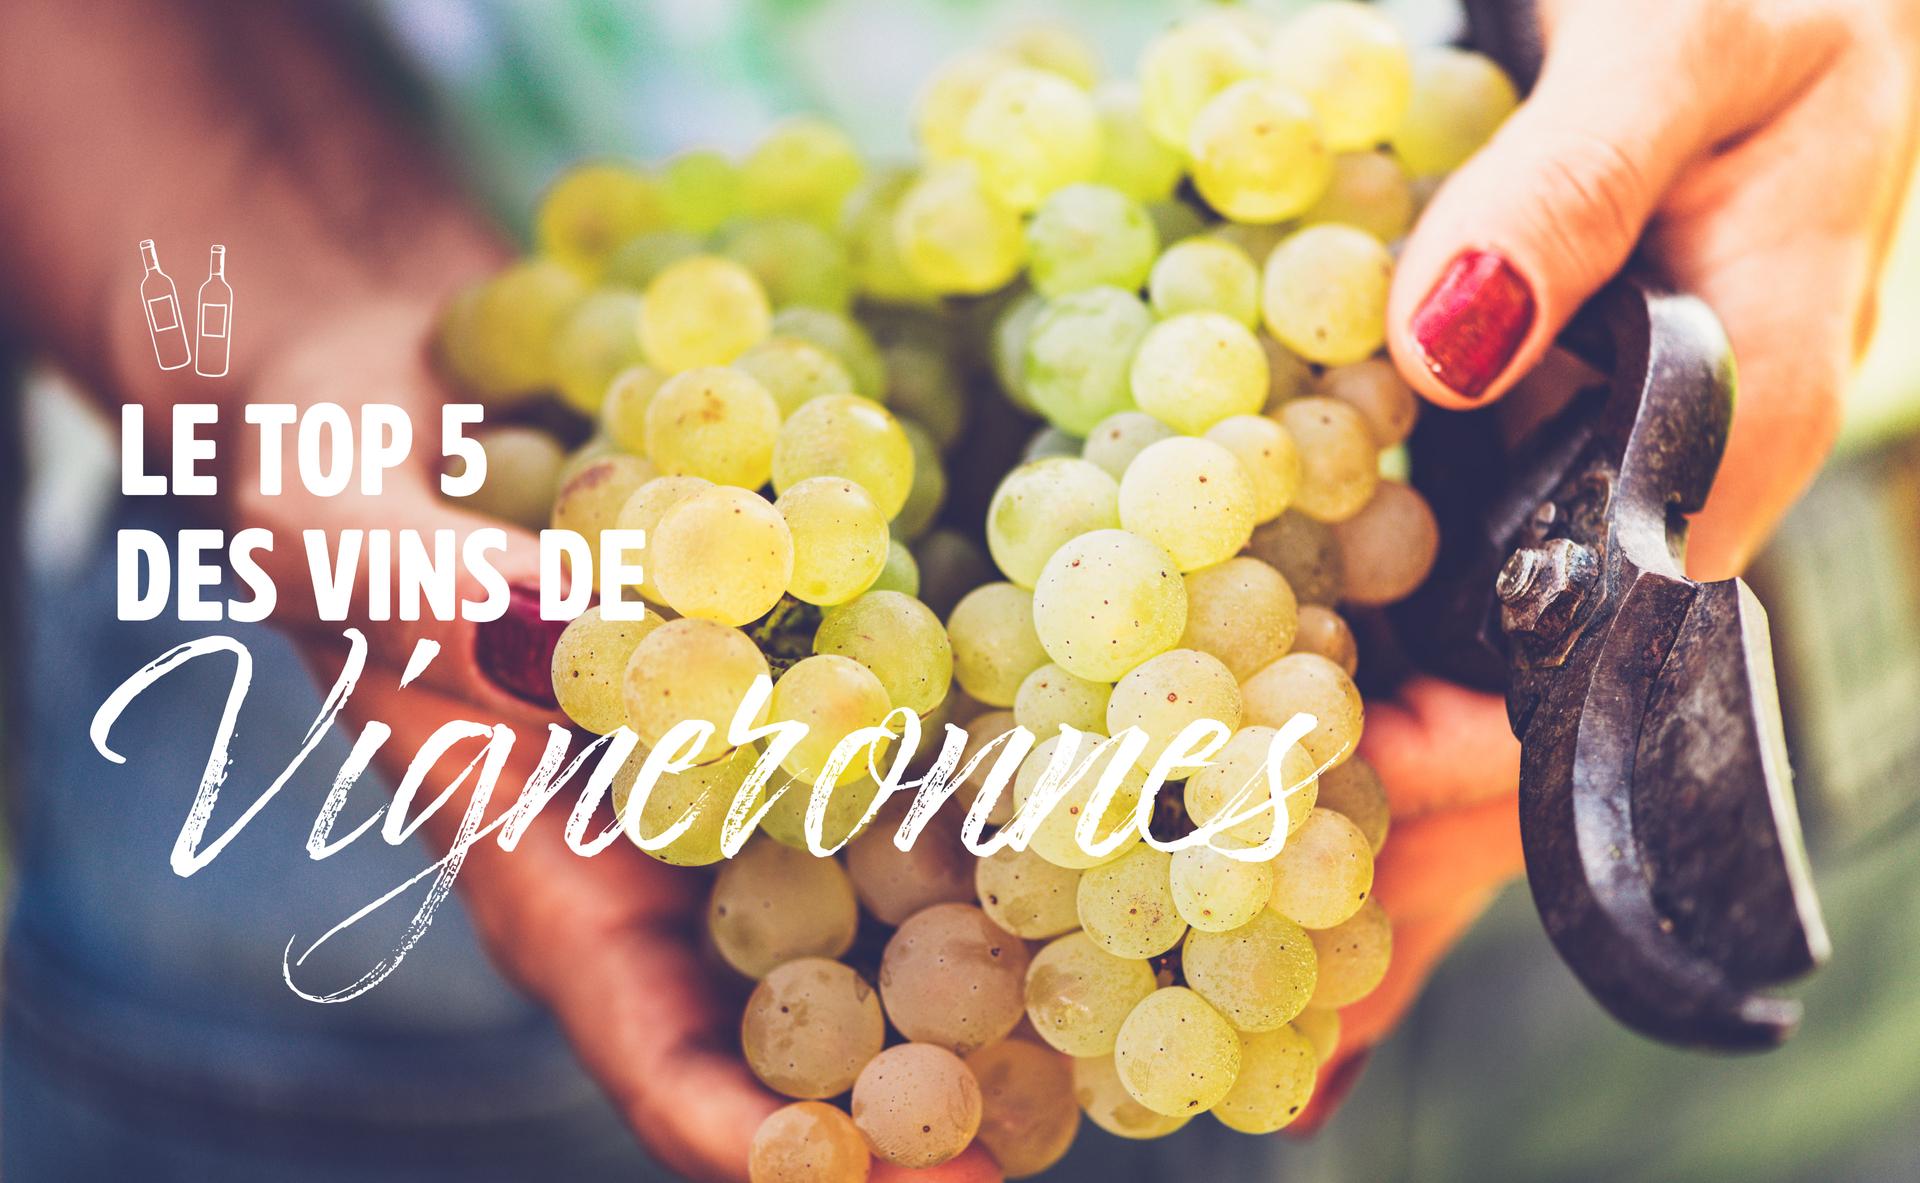 Top 5 des vins de vigneronnes